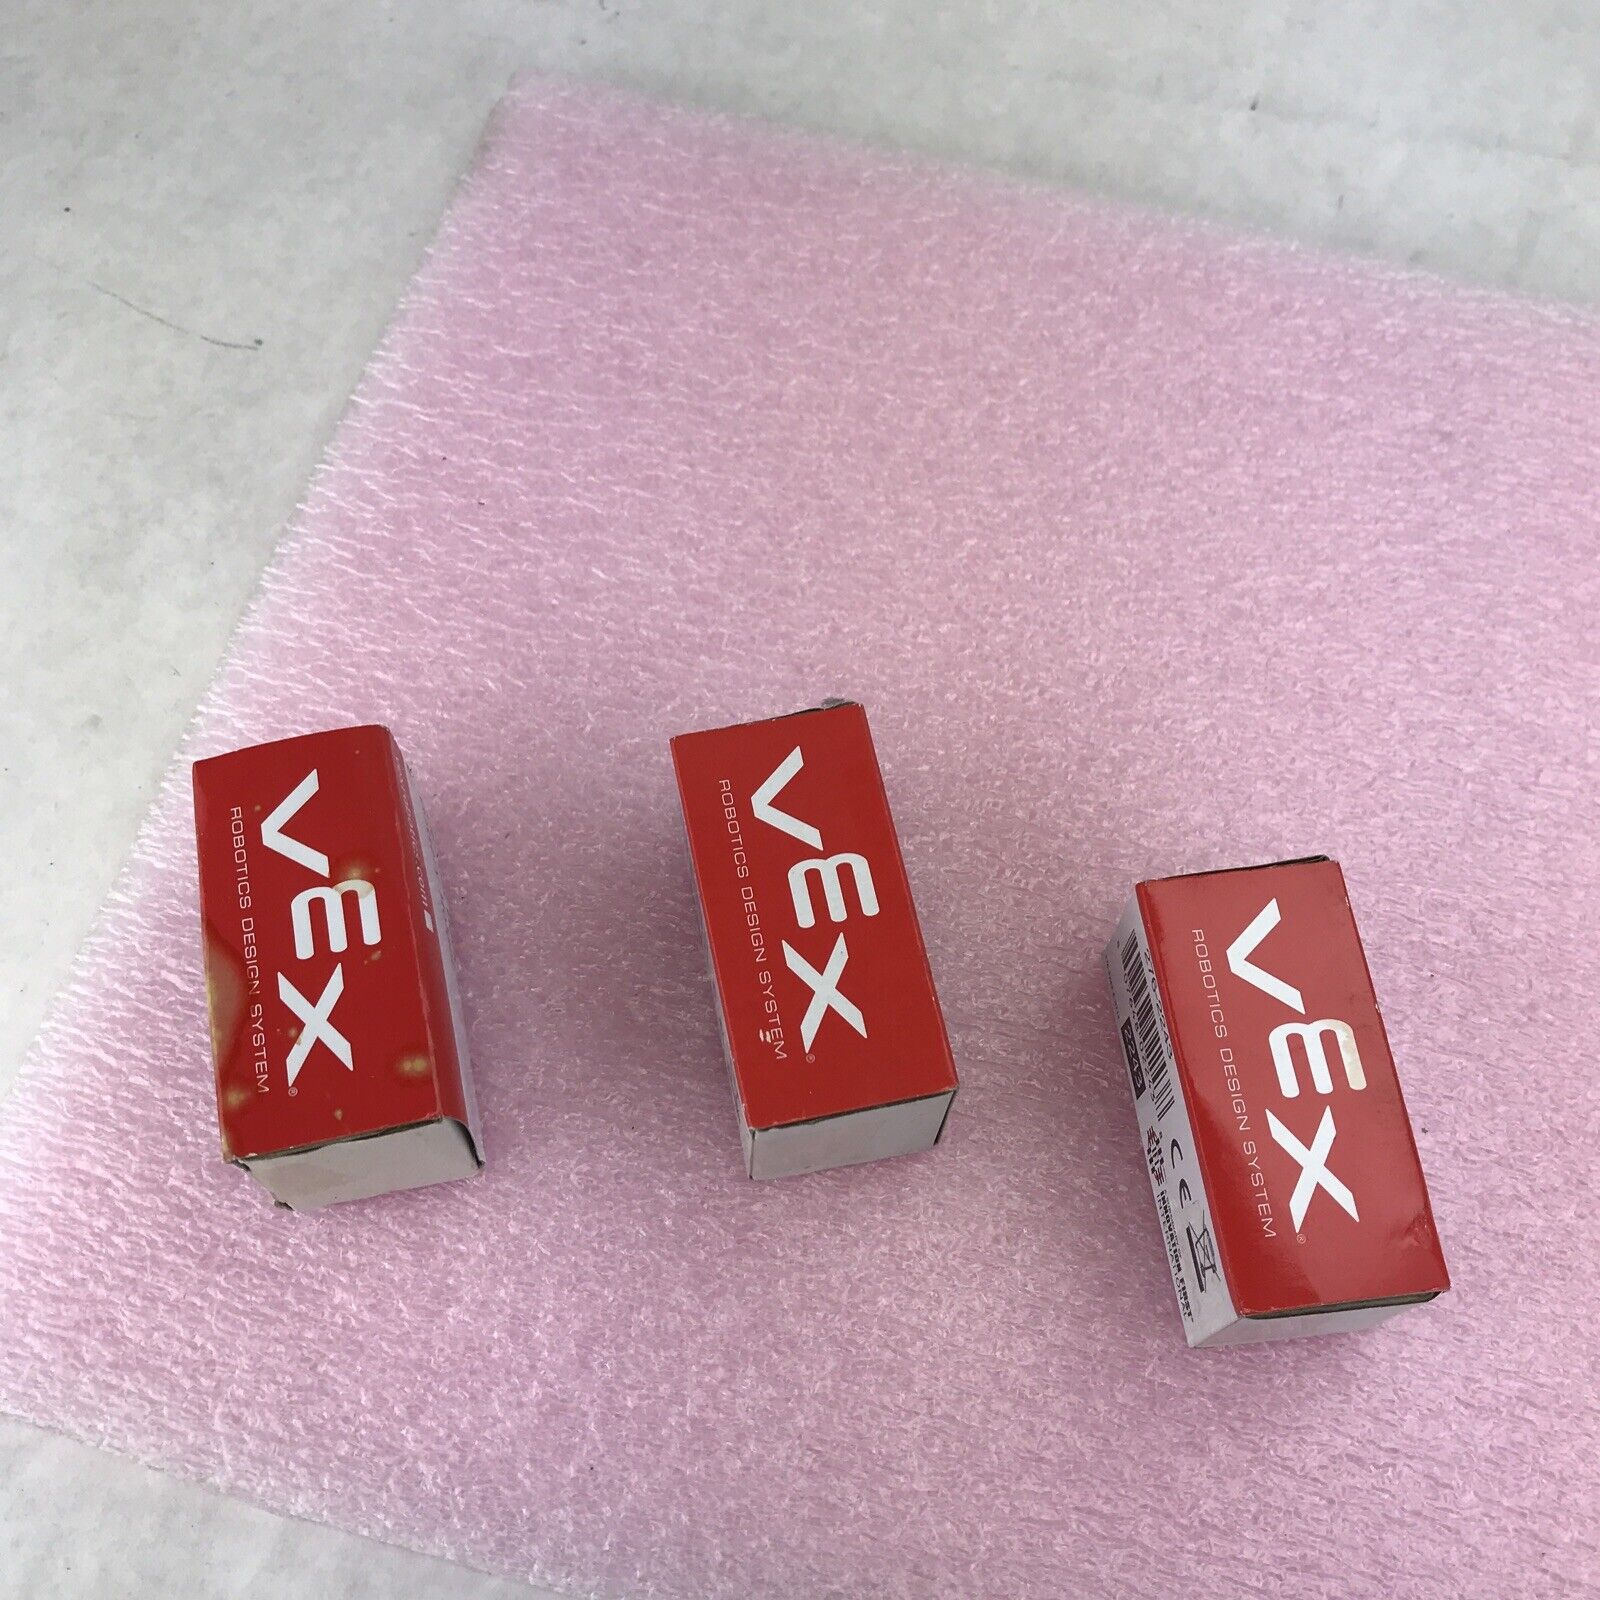 VEX Robotics #276-2243 VEXnet Backup Battery Holder  -  Lot of 3